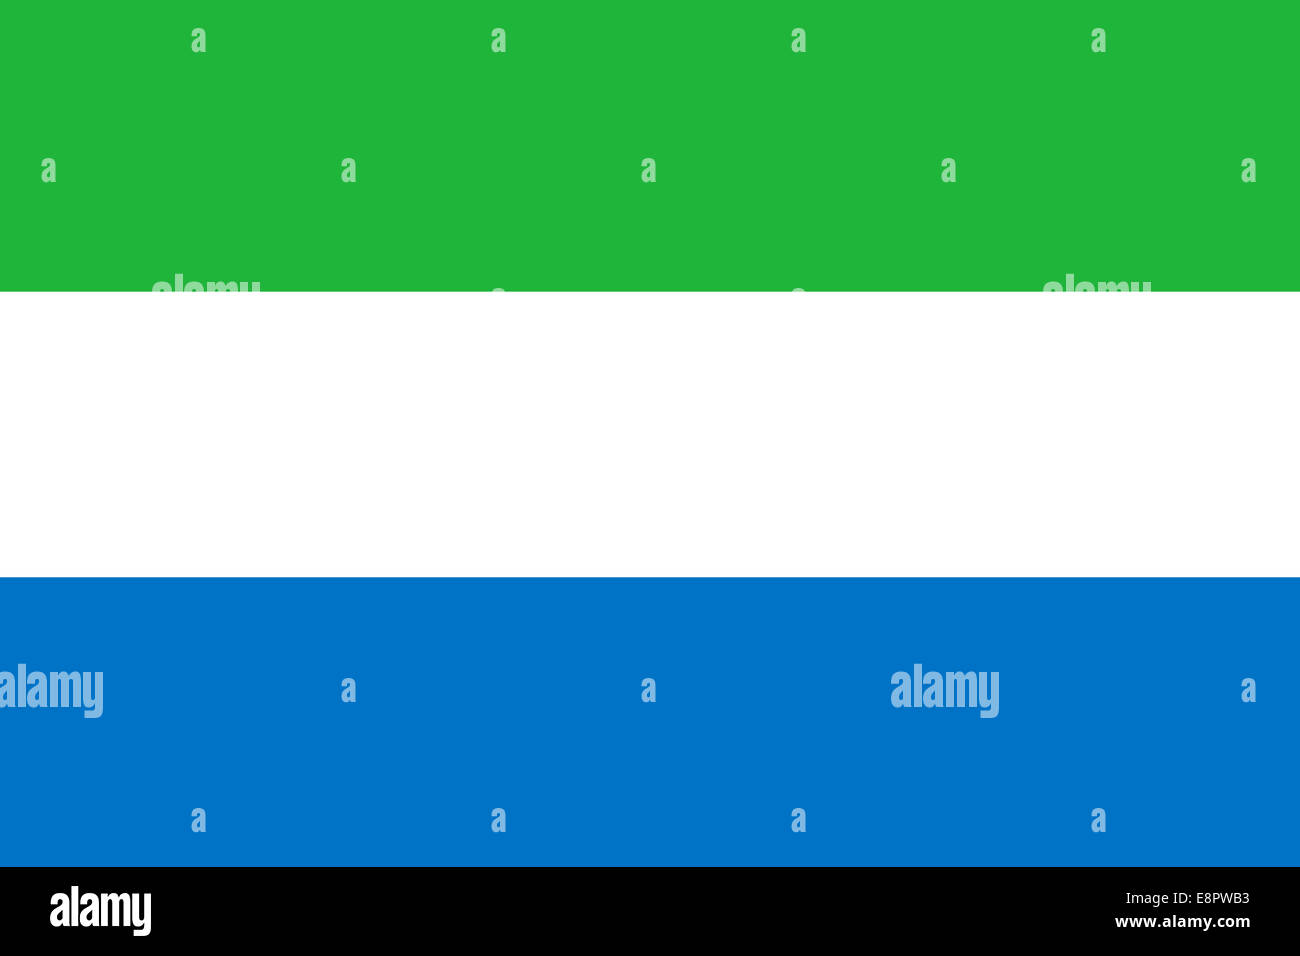 Flag of Sierra Leone - Sierra Leone Flag standard ratio - modalità colore RGB reale Foto Stock